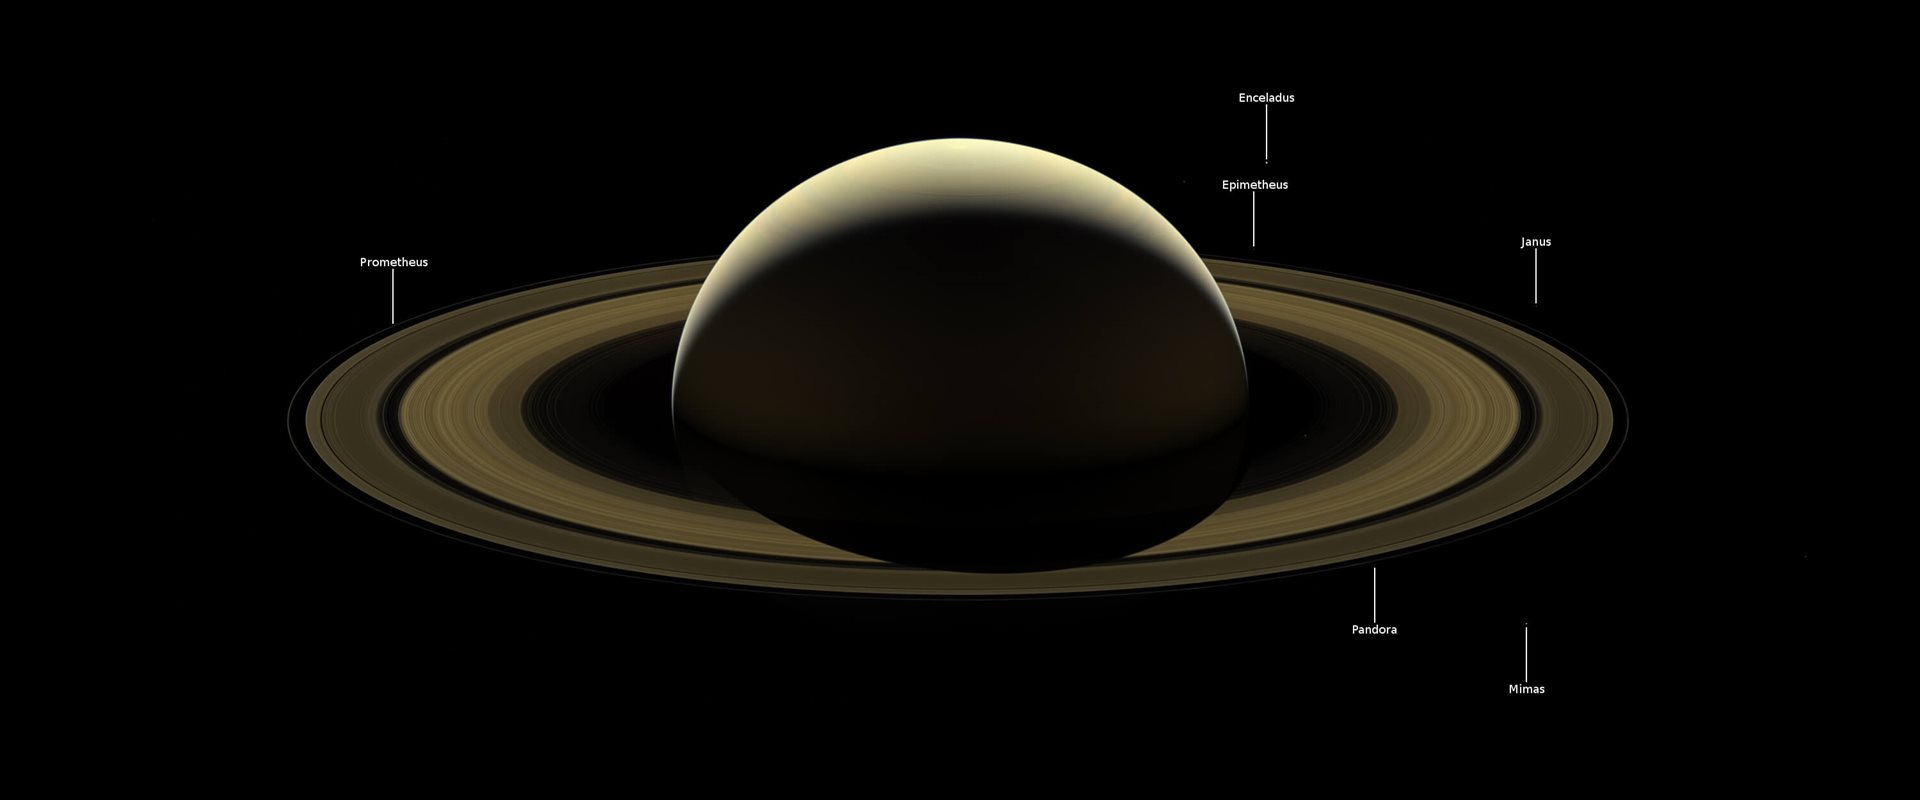 Aplink Saturną